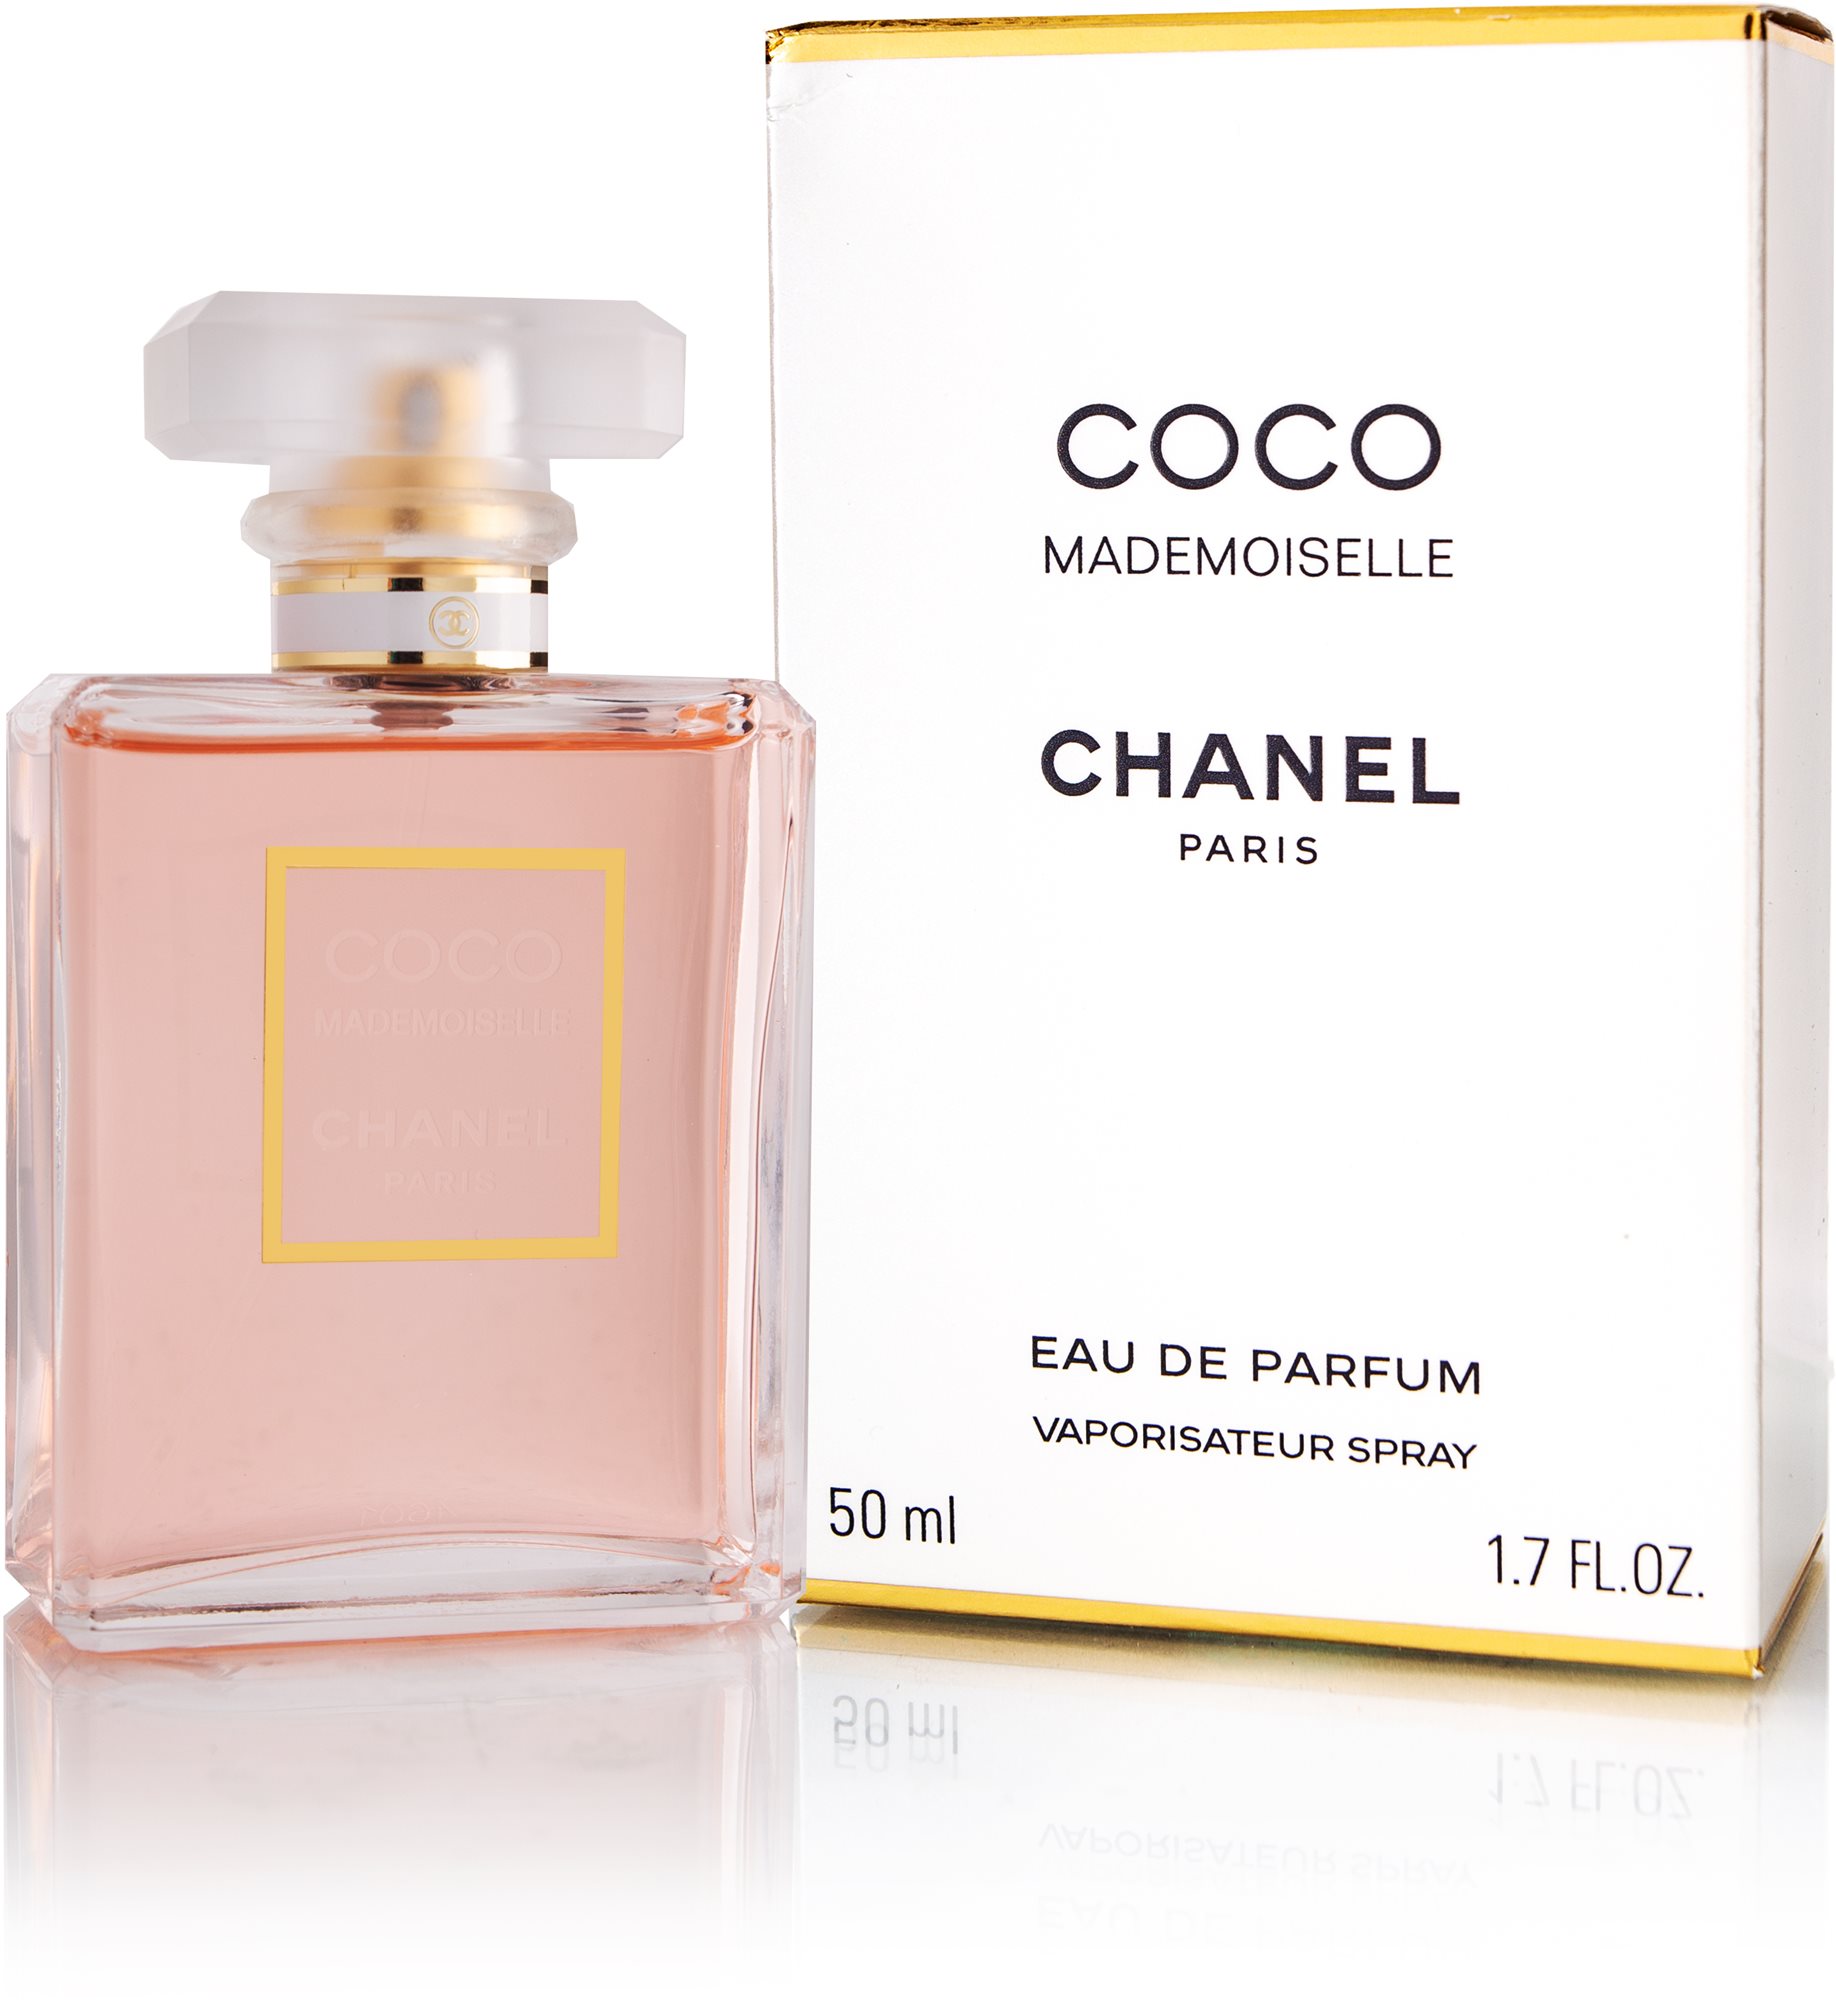 CHANEL Coco Mademoiselle 50 ml